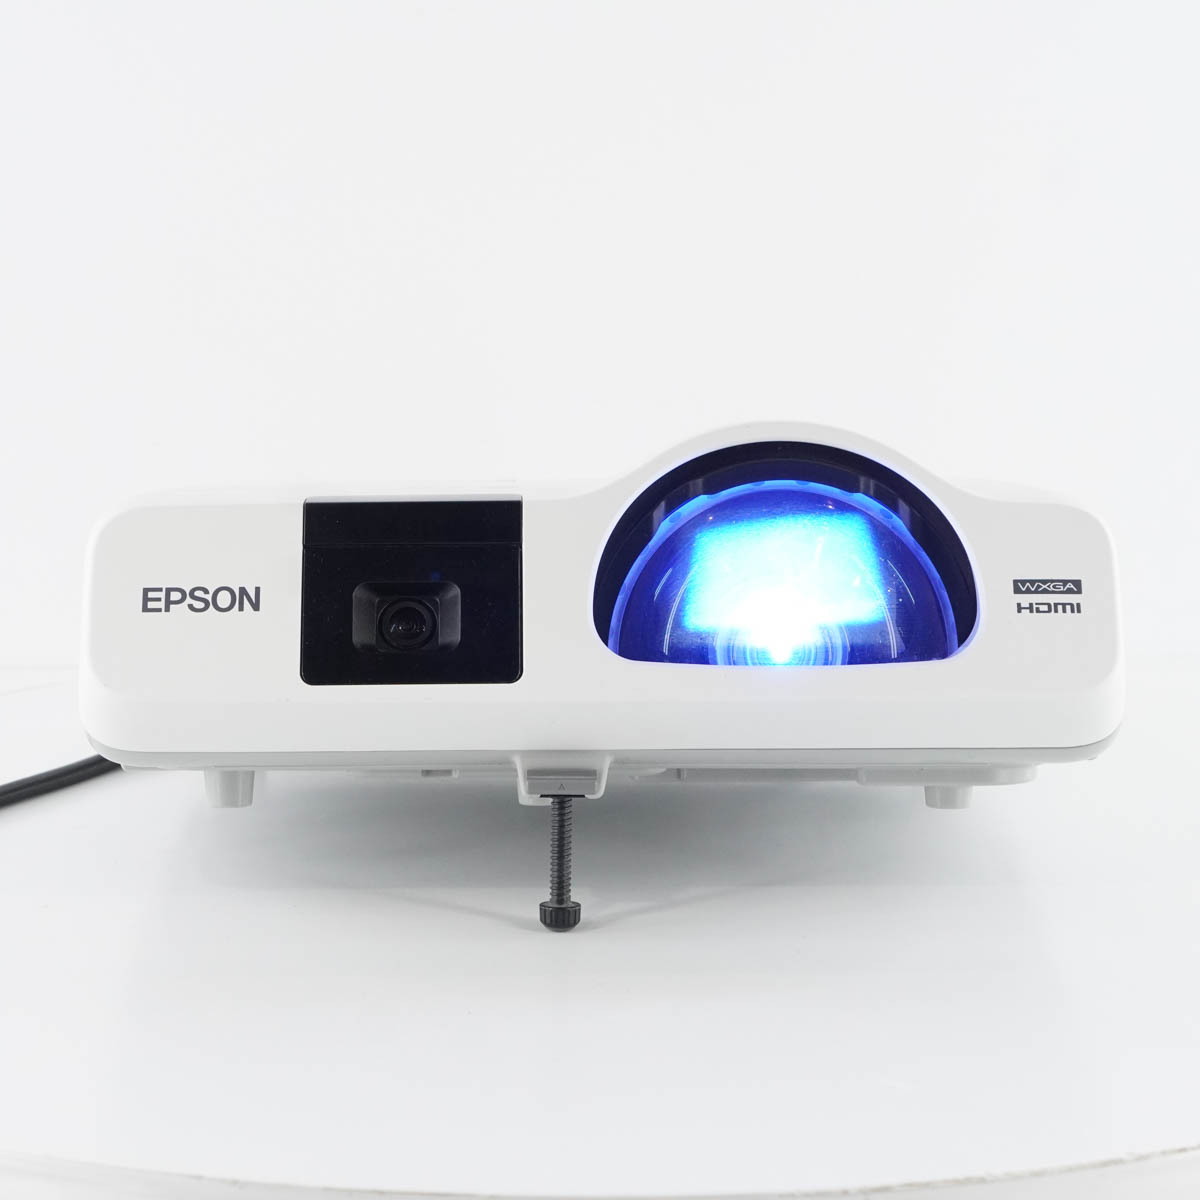 PG]USED 8日保証 ランプ797時間 EPSON EB-536WT H670D プロジェクター 